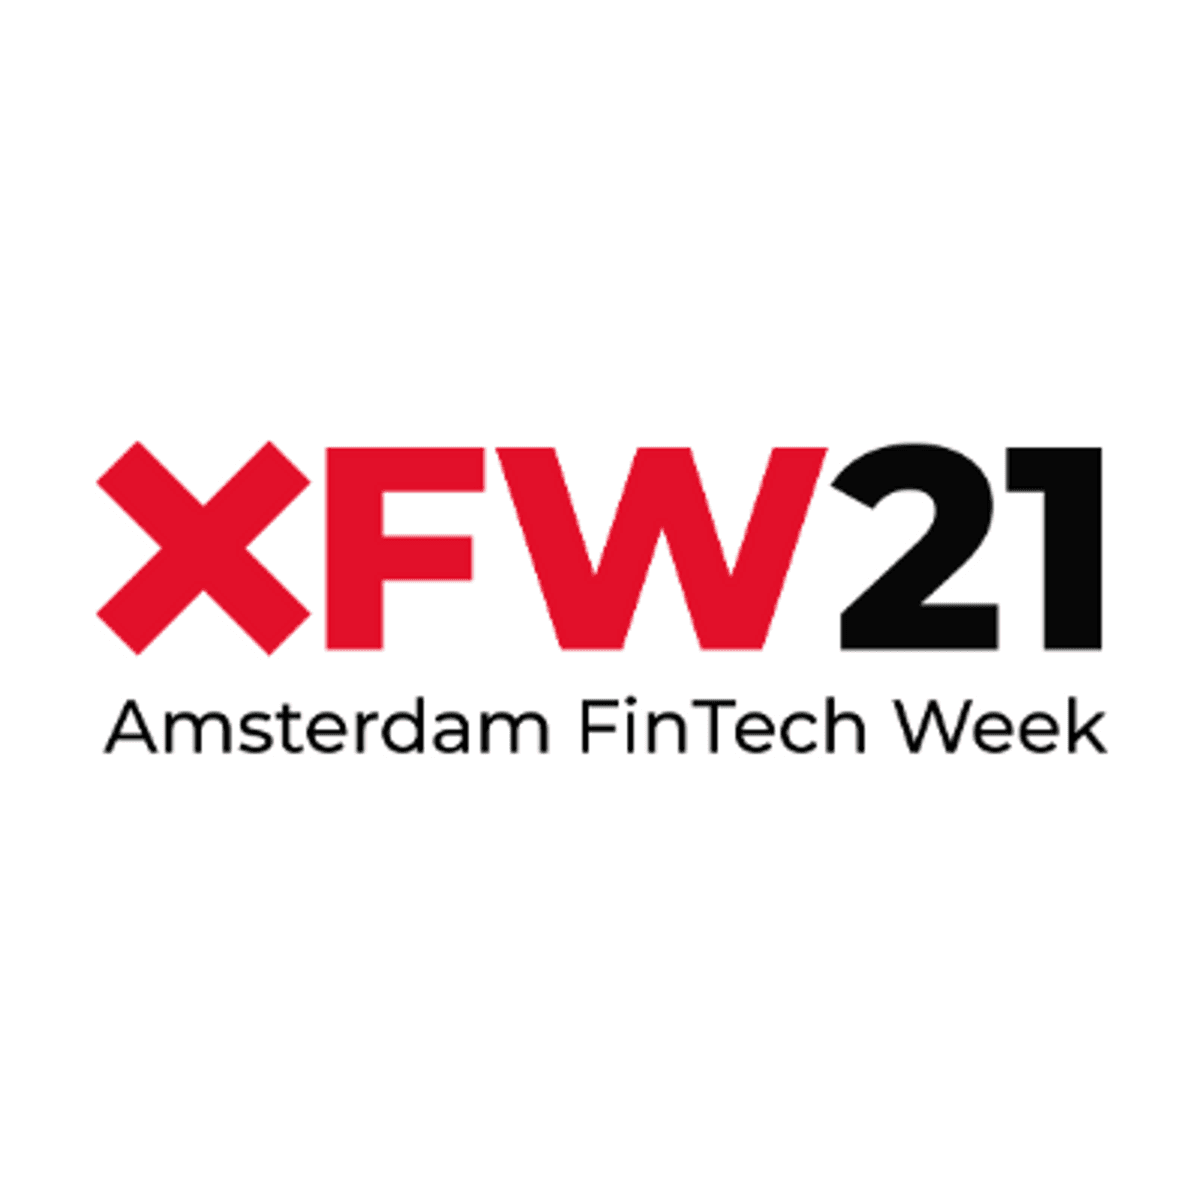 Koningin Máxima houdt virtuele openingstoespraak bij Amsterdam Fintech Week image